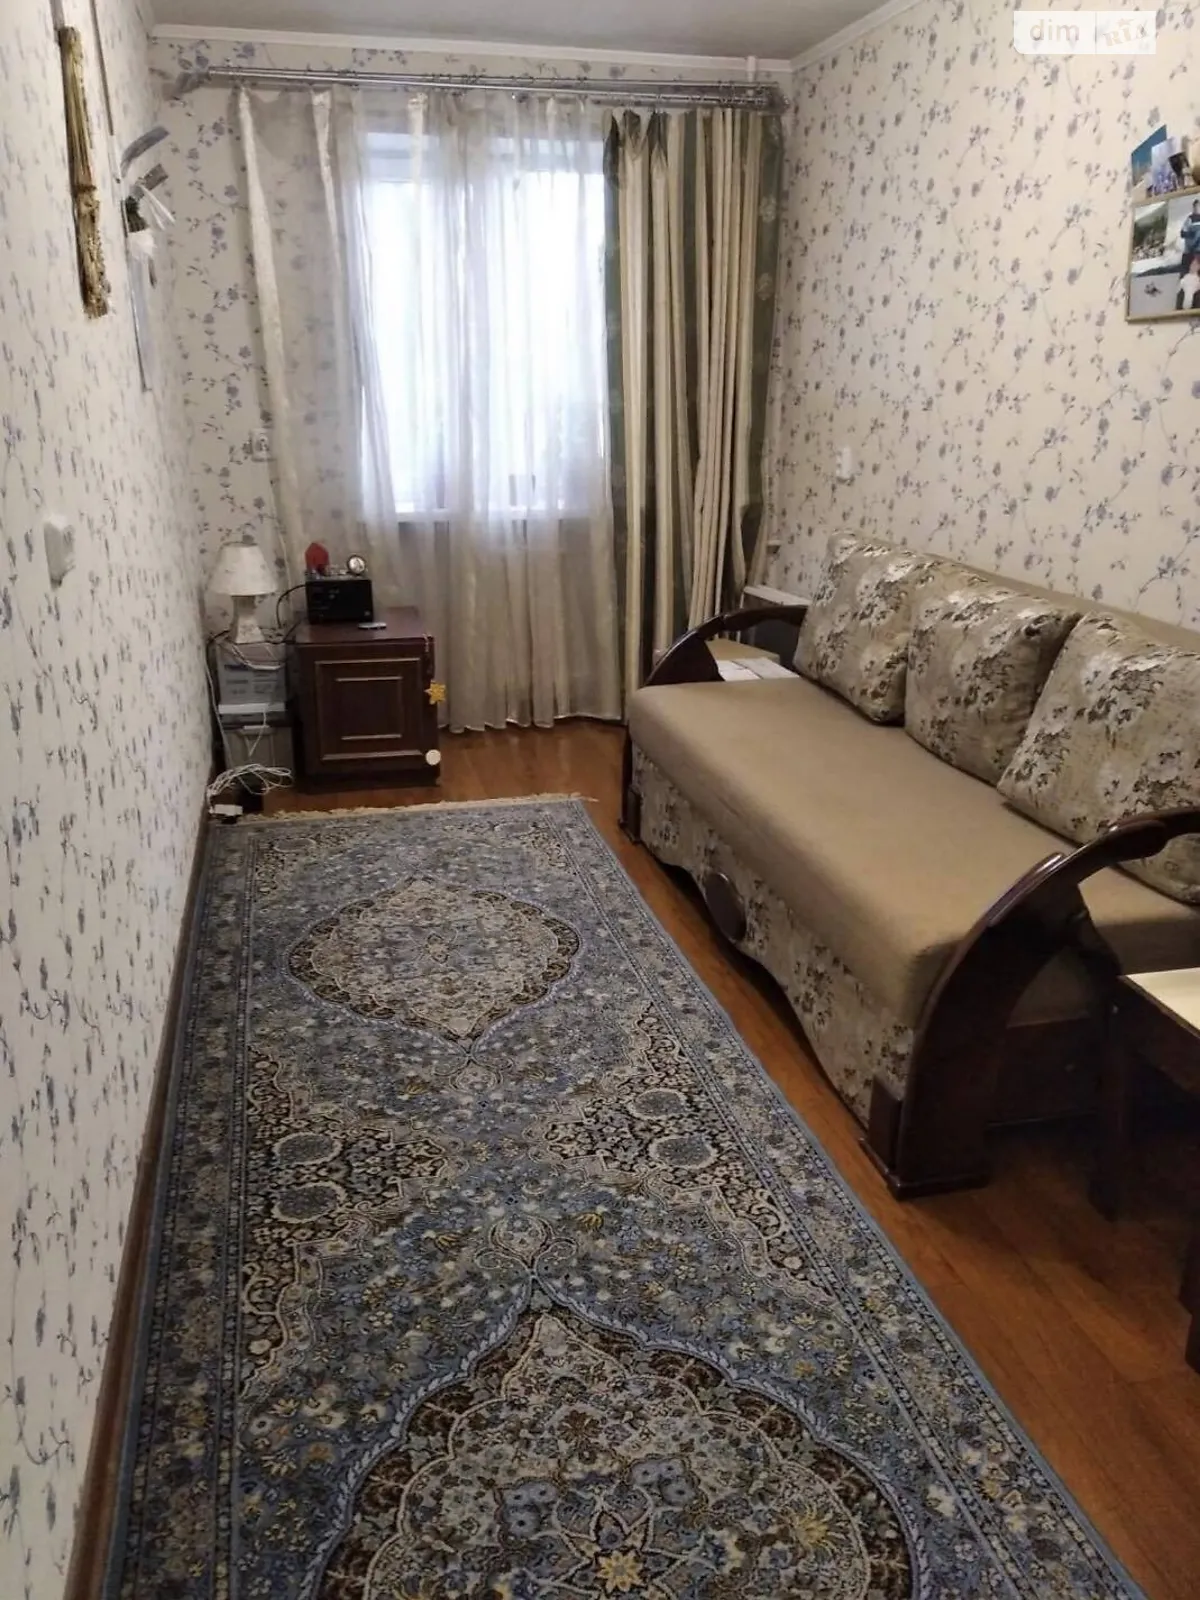 Продается комната 39.7 кв. м в Одессе, цена: 15000 $ - фото 1